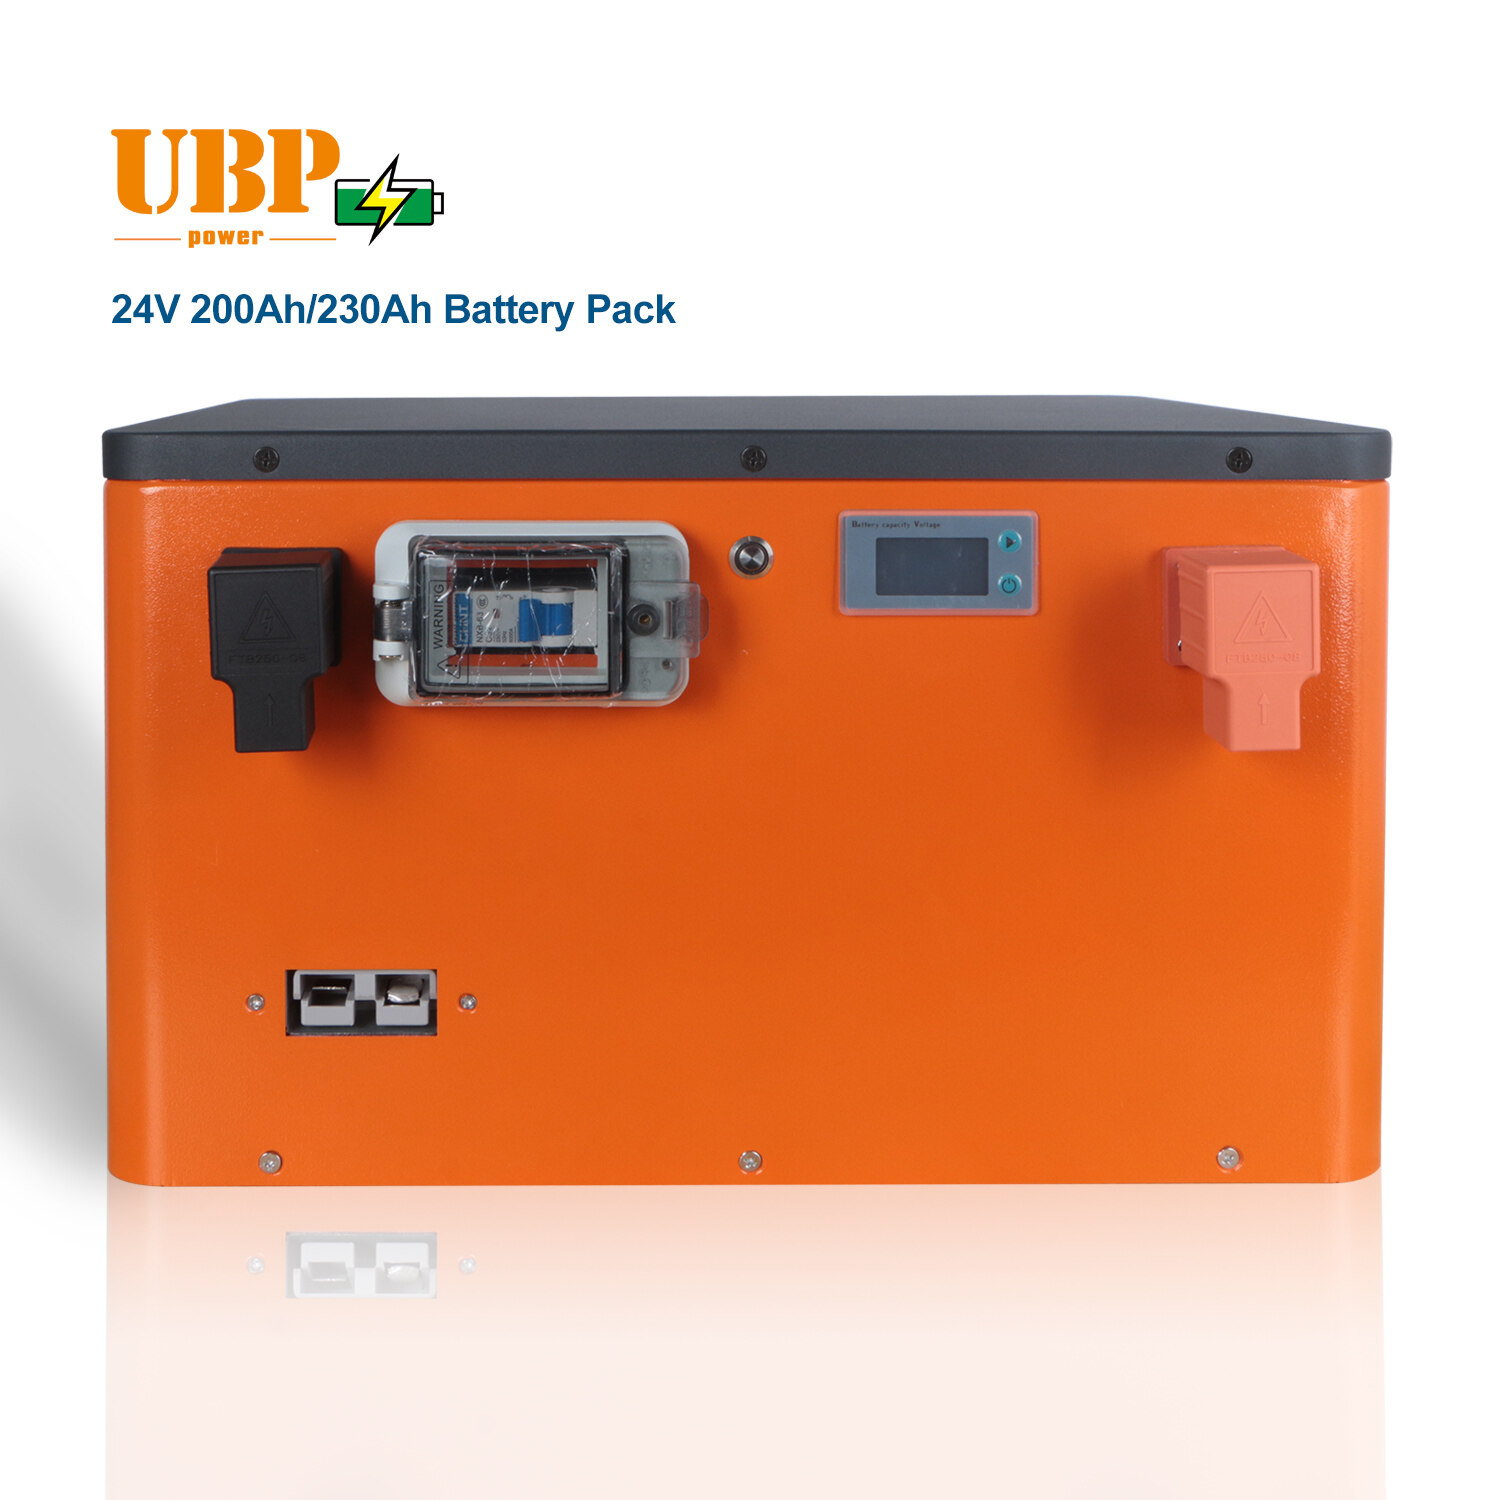 UBPPOWER 24V 200Ah/230Ah LiFePo4 Battery Pack 5.17Kwh Energy